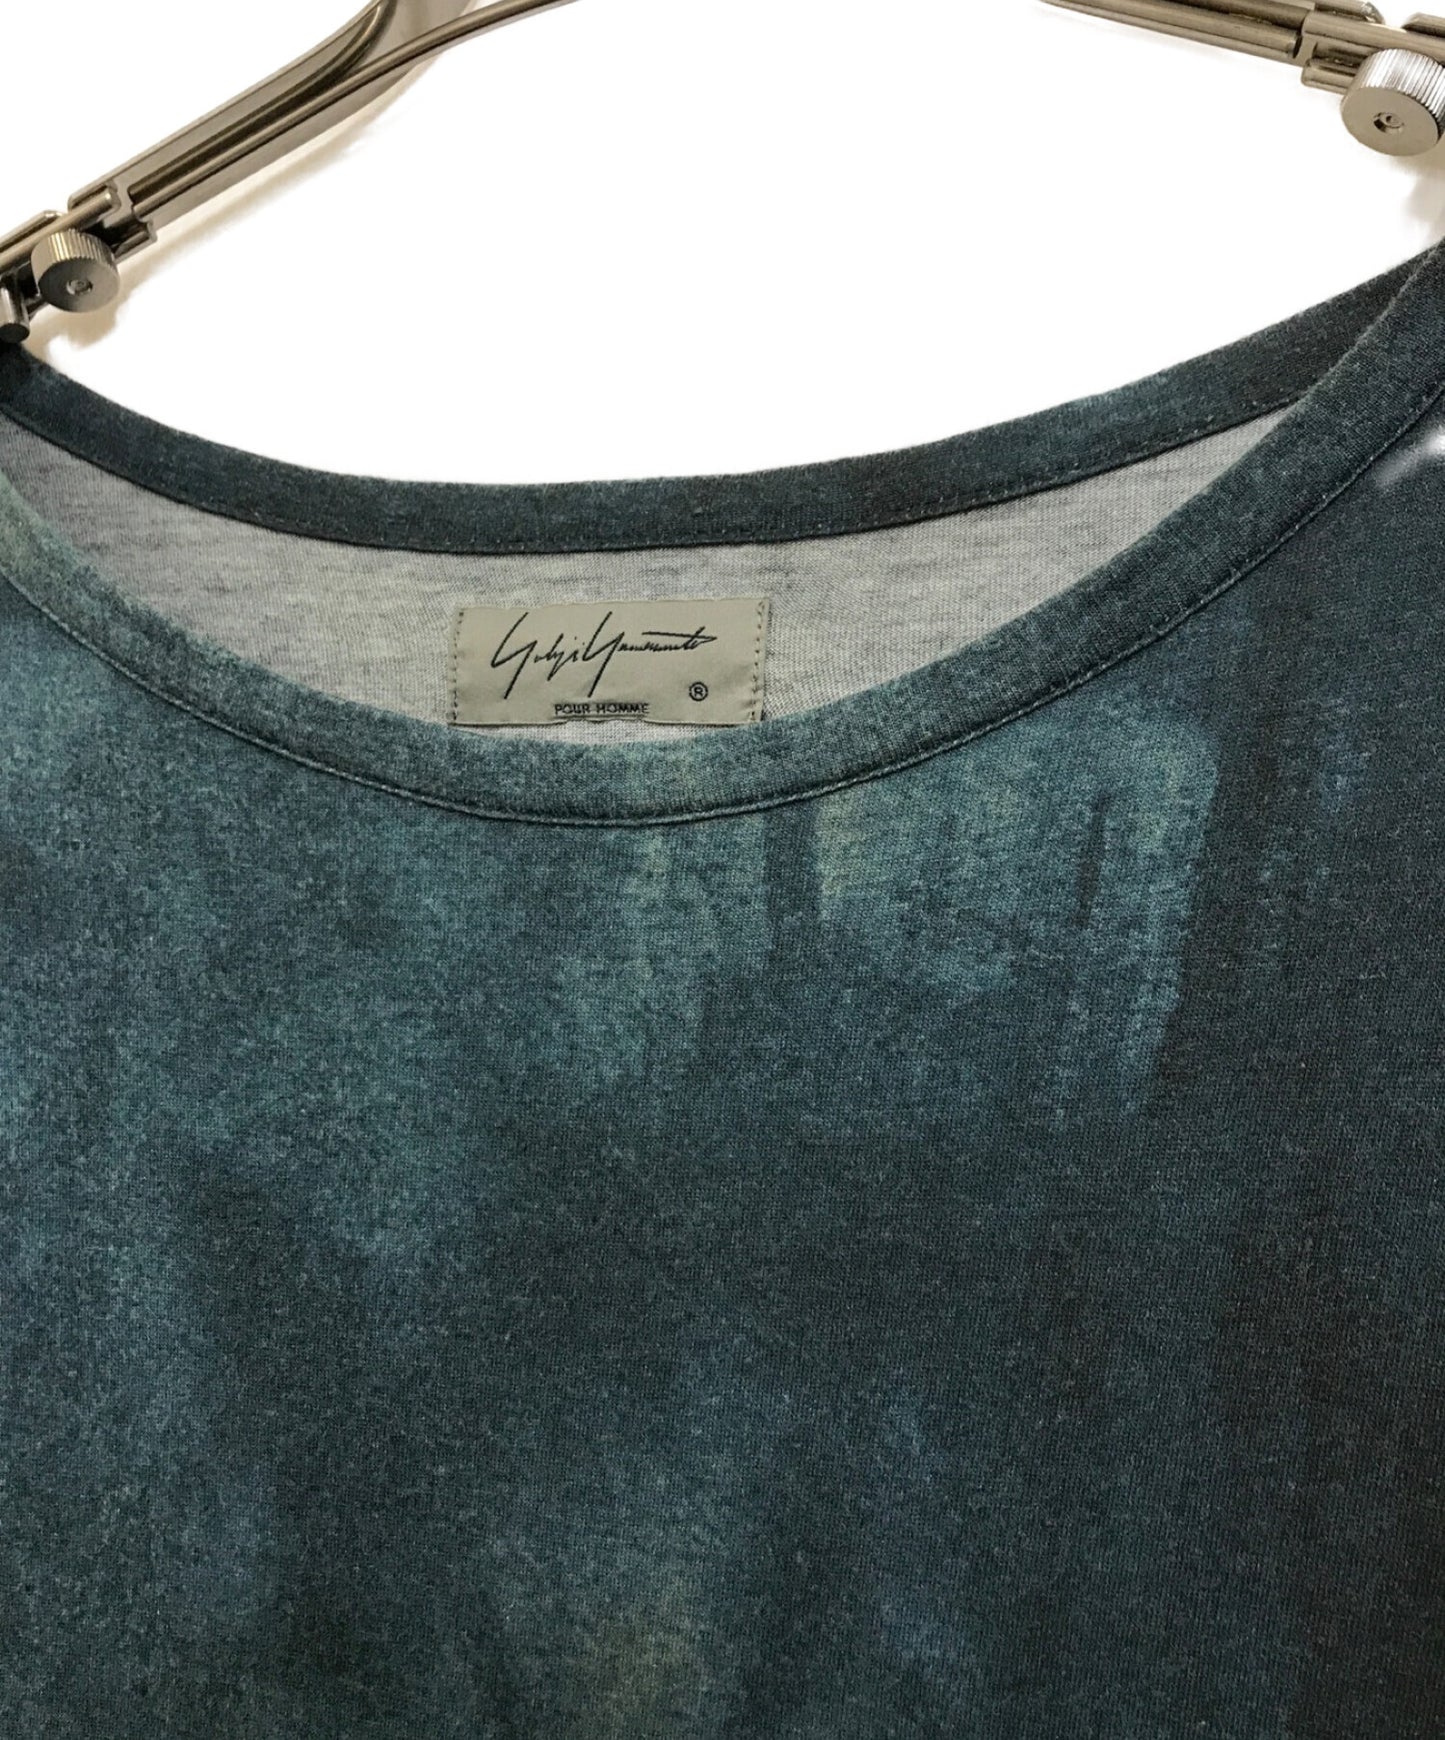 Yohji Yamamoto Pour Homme Transfer Print Layed Long-Sleeved Cut 및 Sewn HW-T67-279